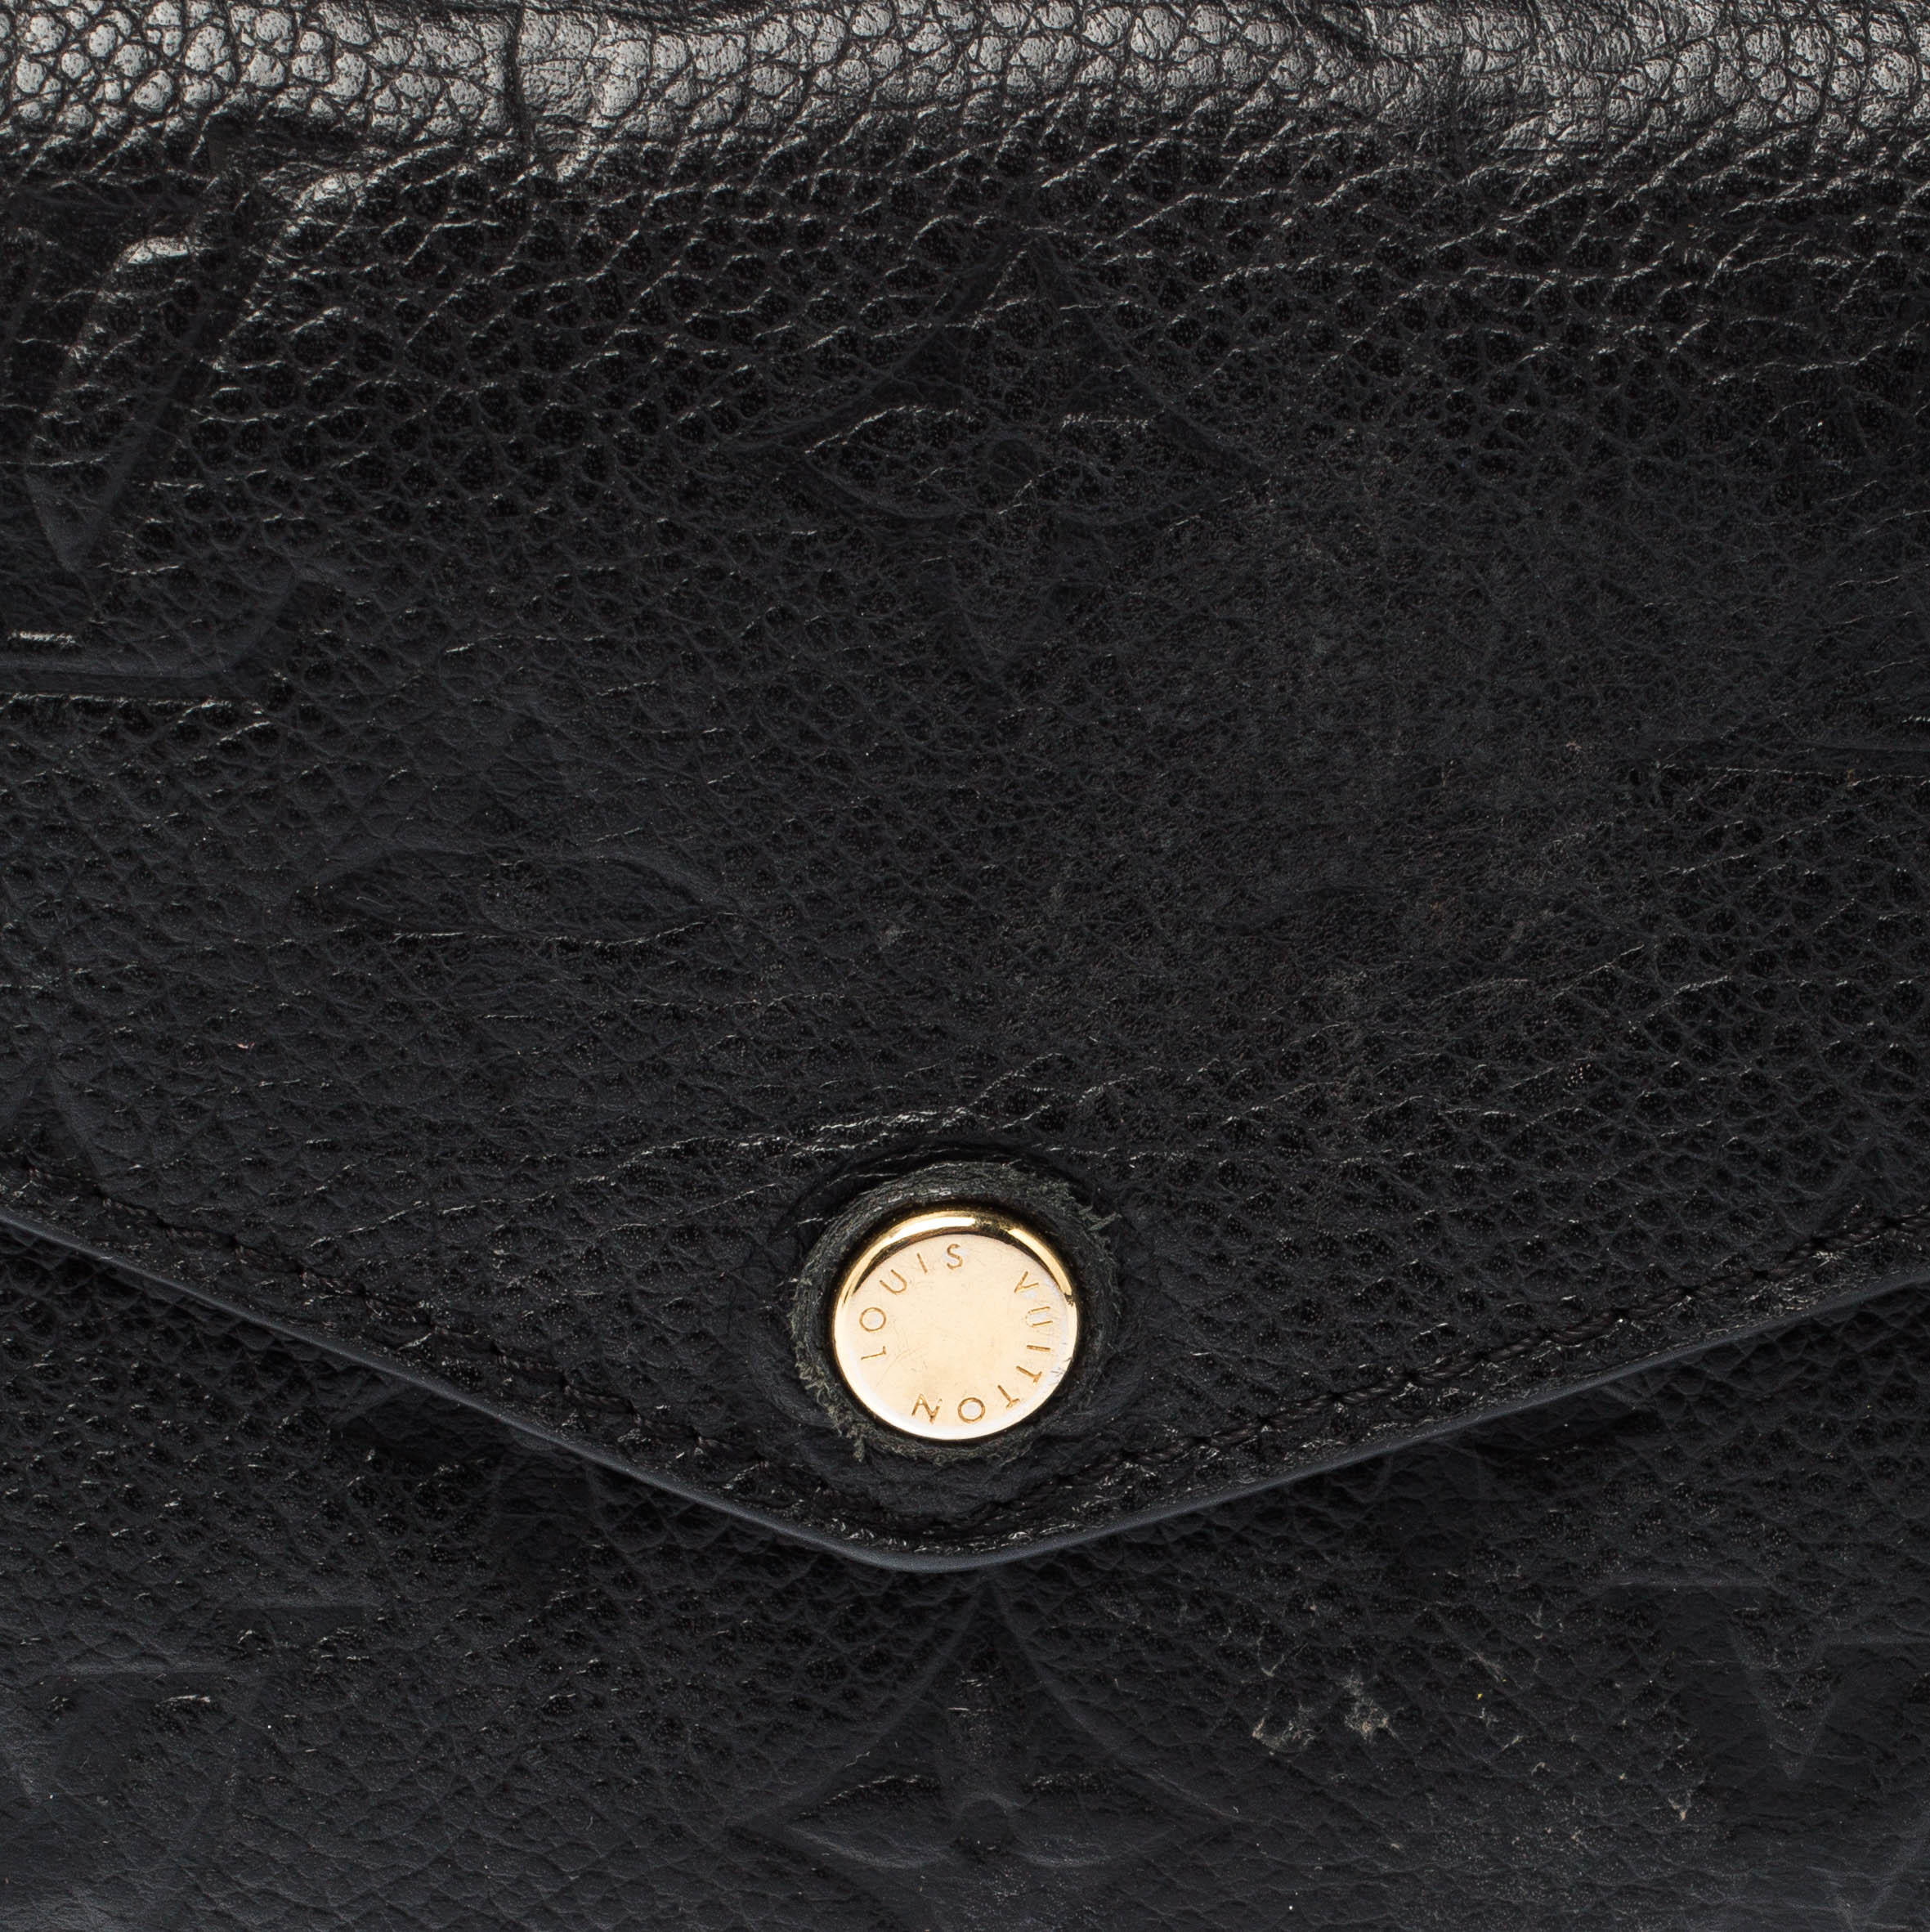 Métis Compact Wallet Monogram Empreinte Leather - Women - Small